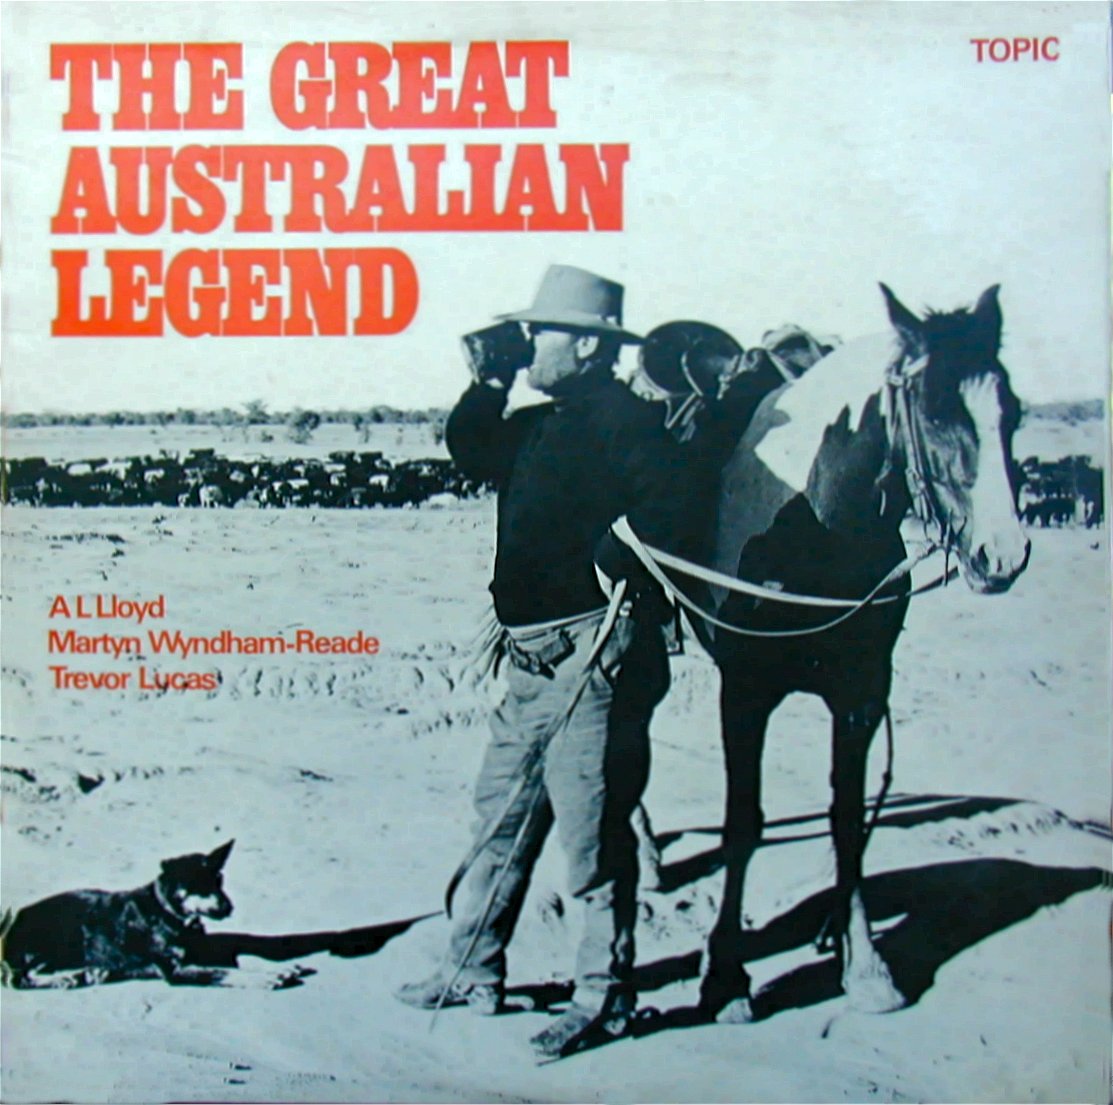 Australian Folk Music and Australian Folk Singers and Musicians